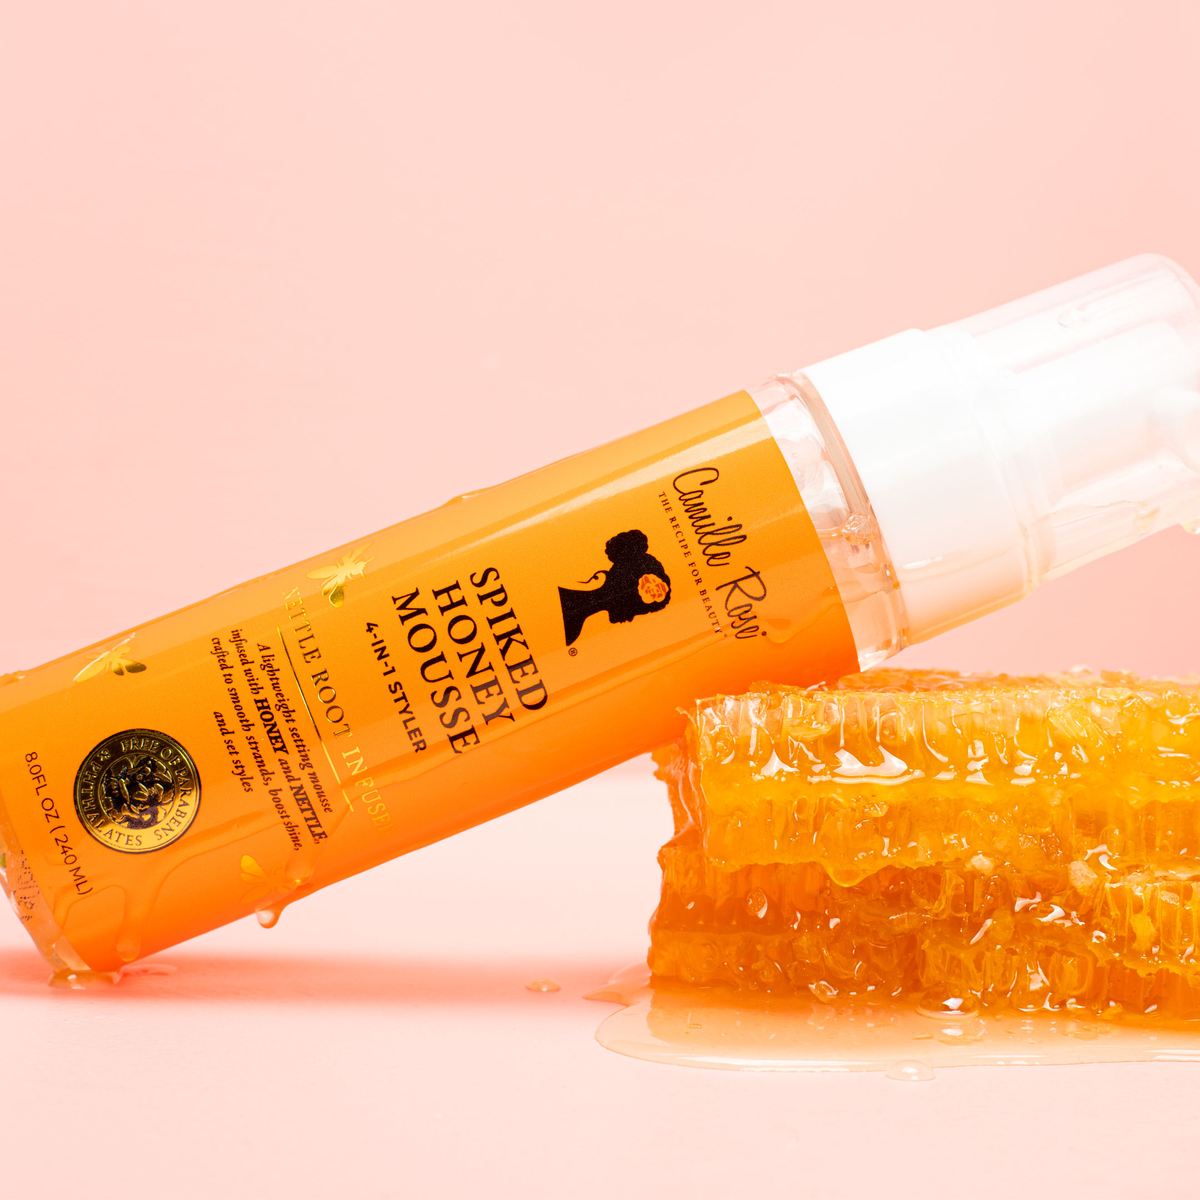 Camille Rose Spiked Honey Styling Mousse, 8.0 fl oz, Unisex - image 4 of 6